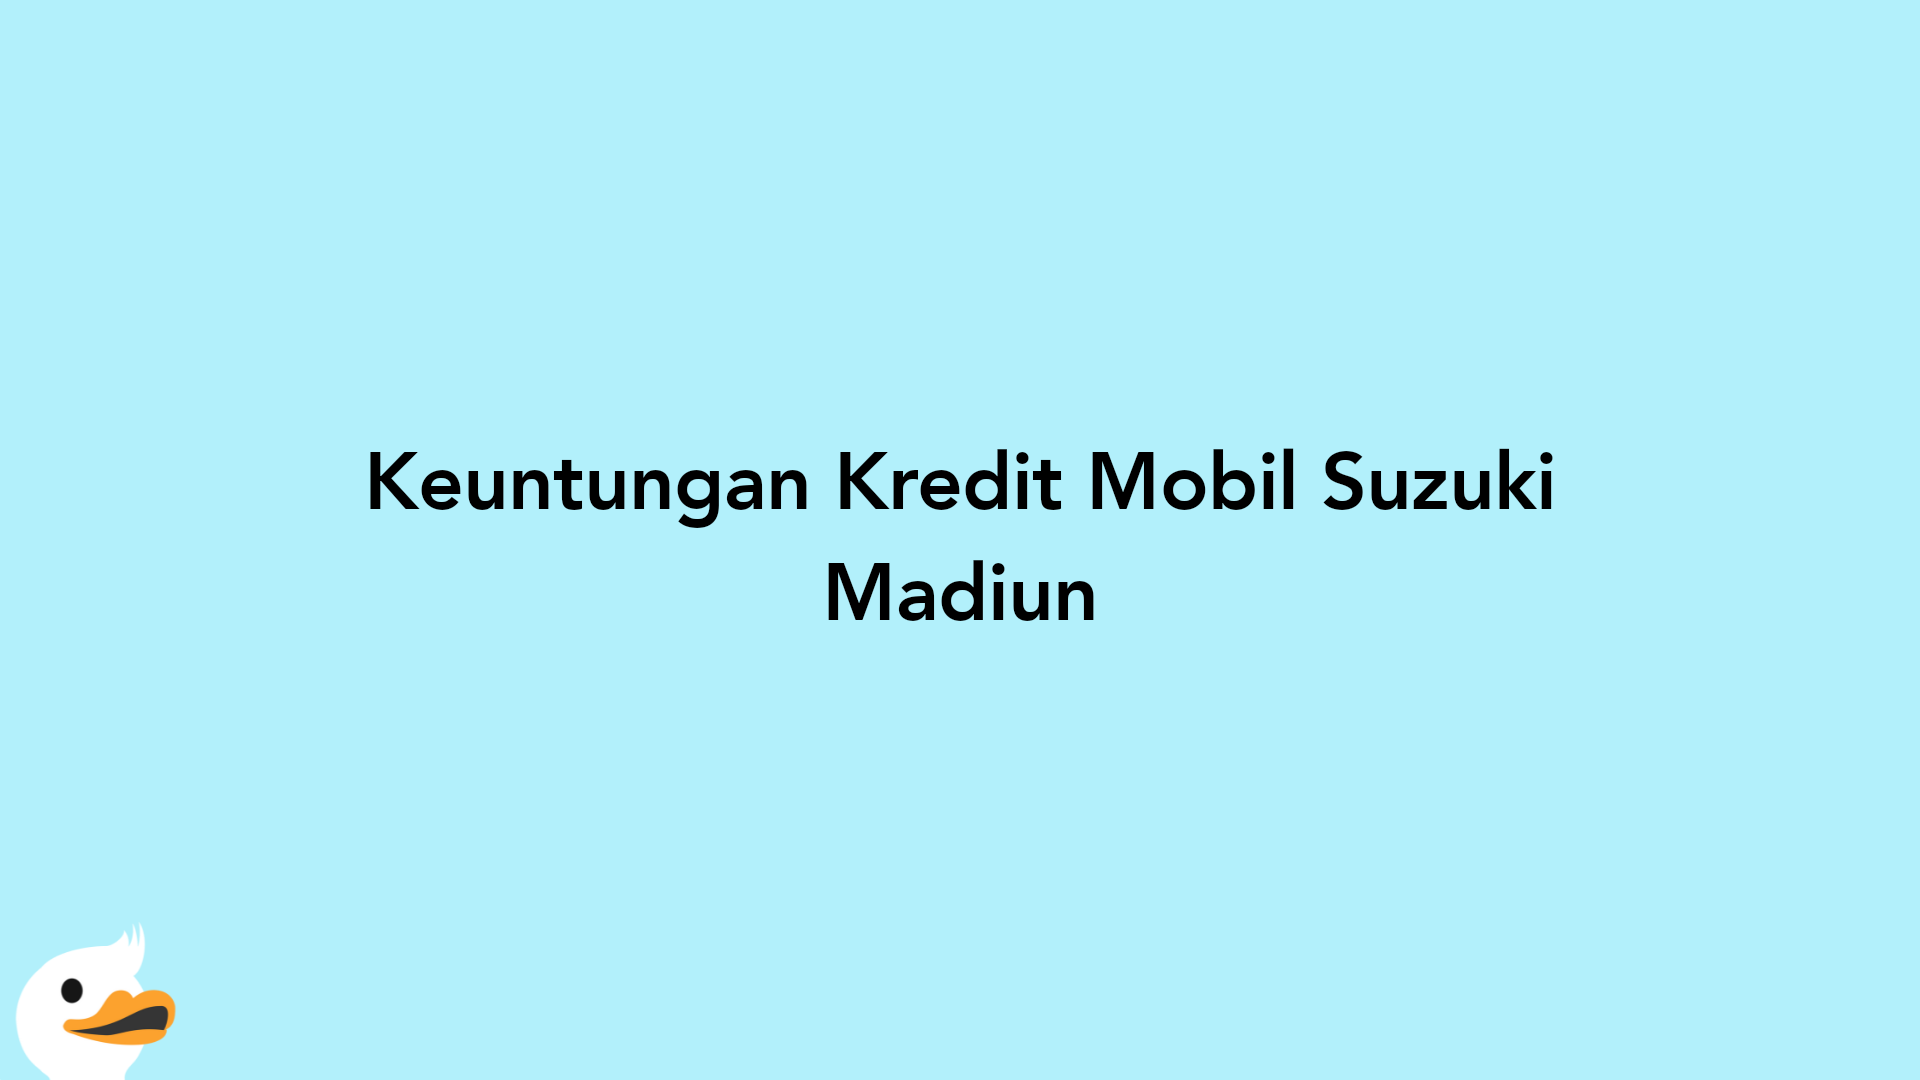 Keuntungan Kredit Mobil Suzuki Madiun